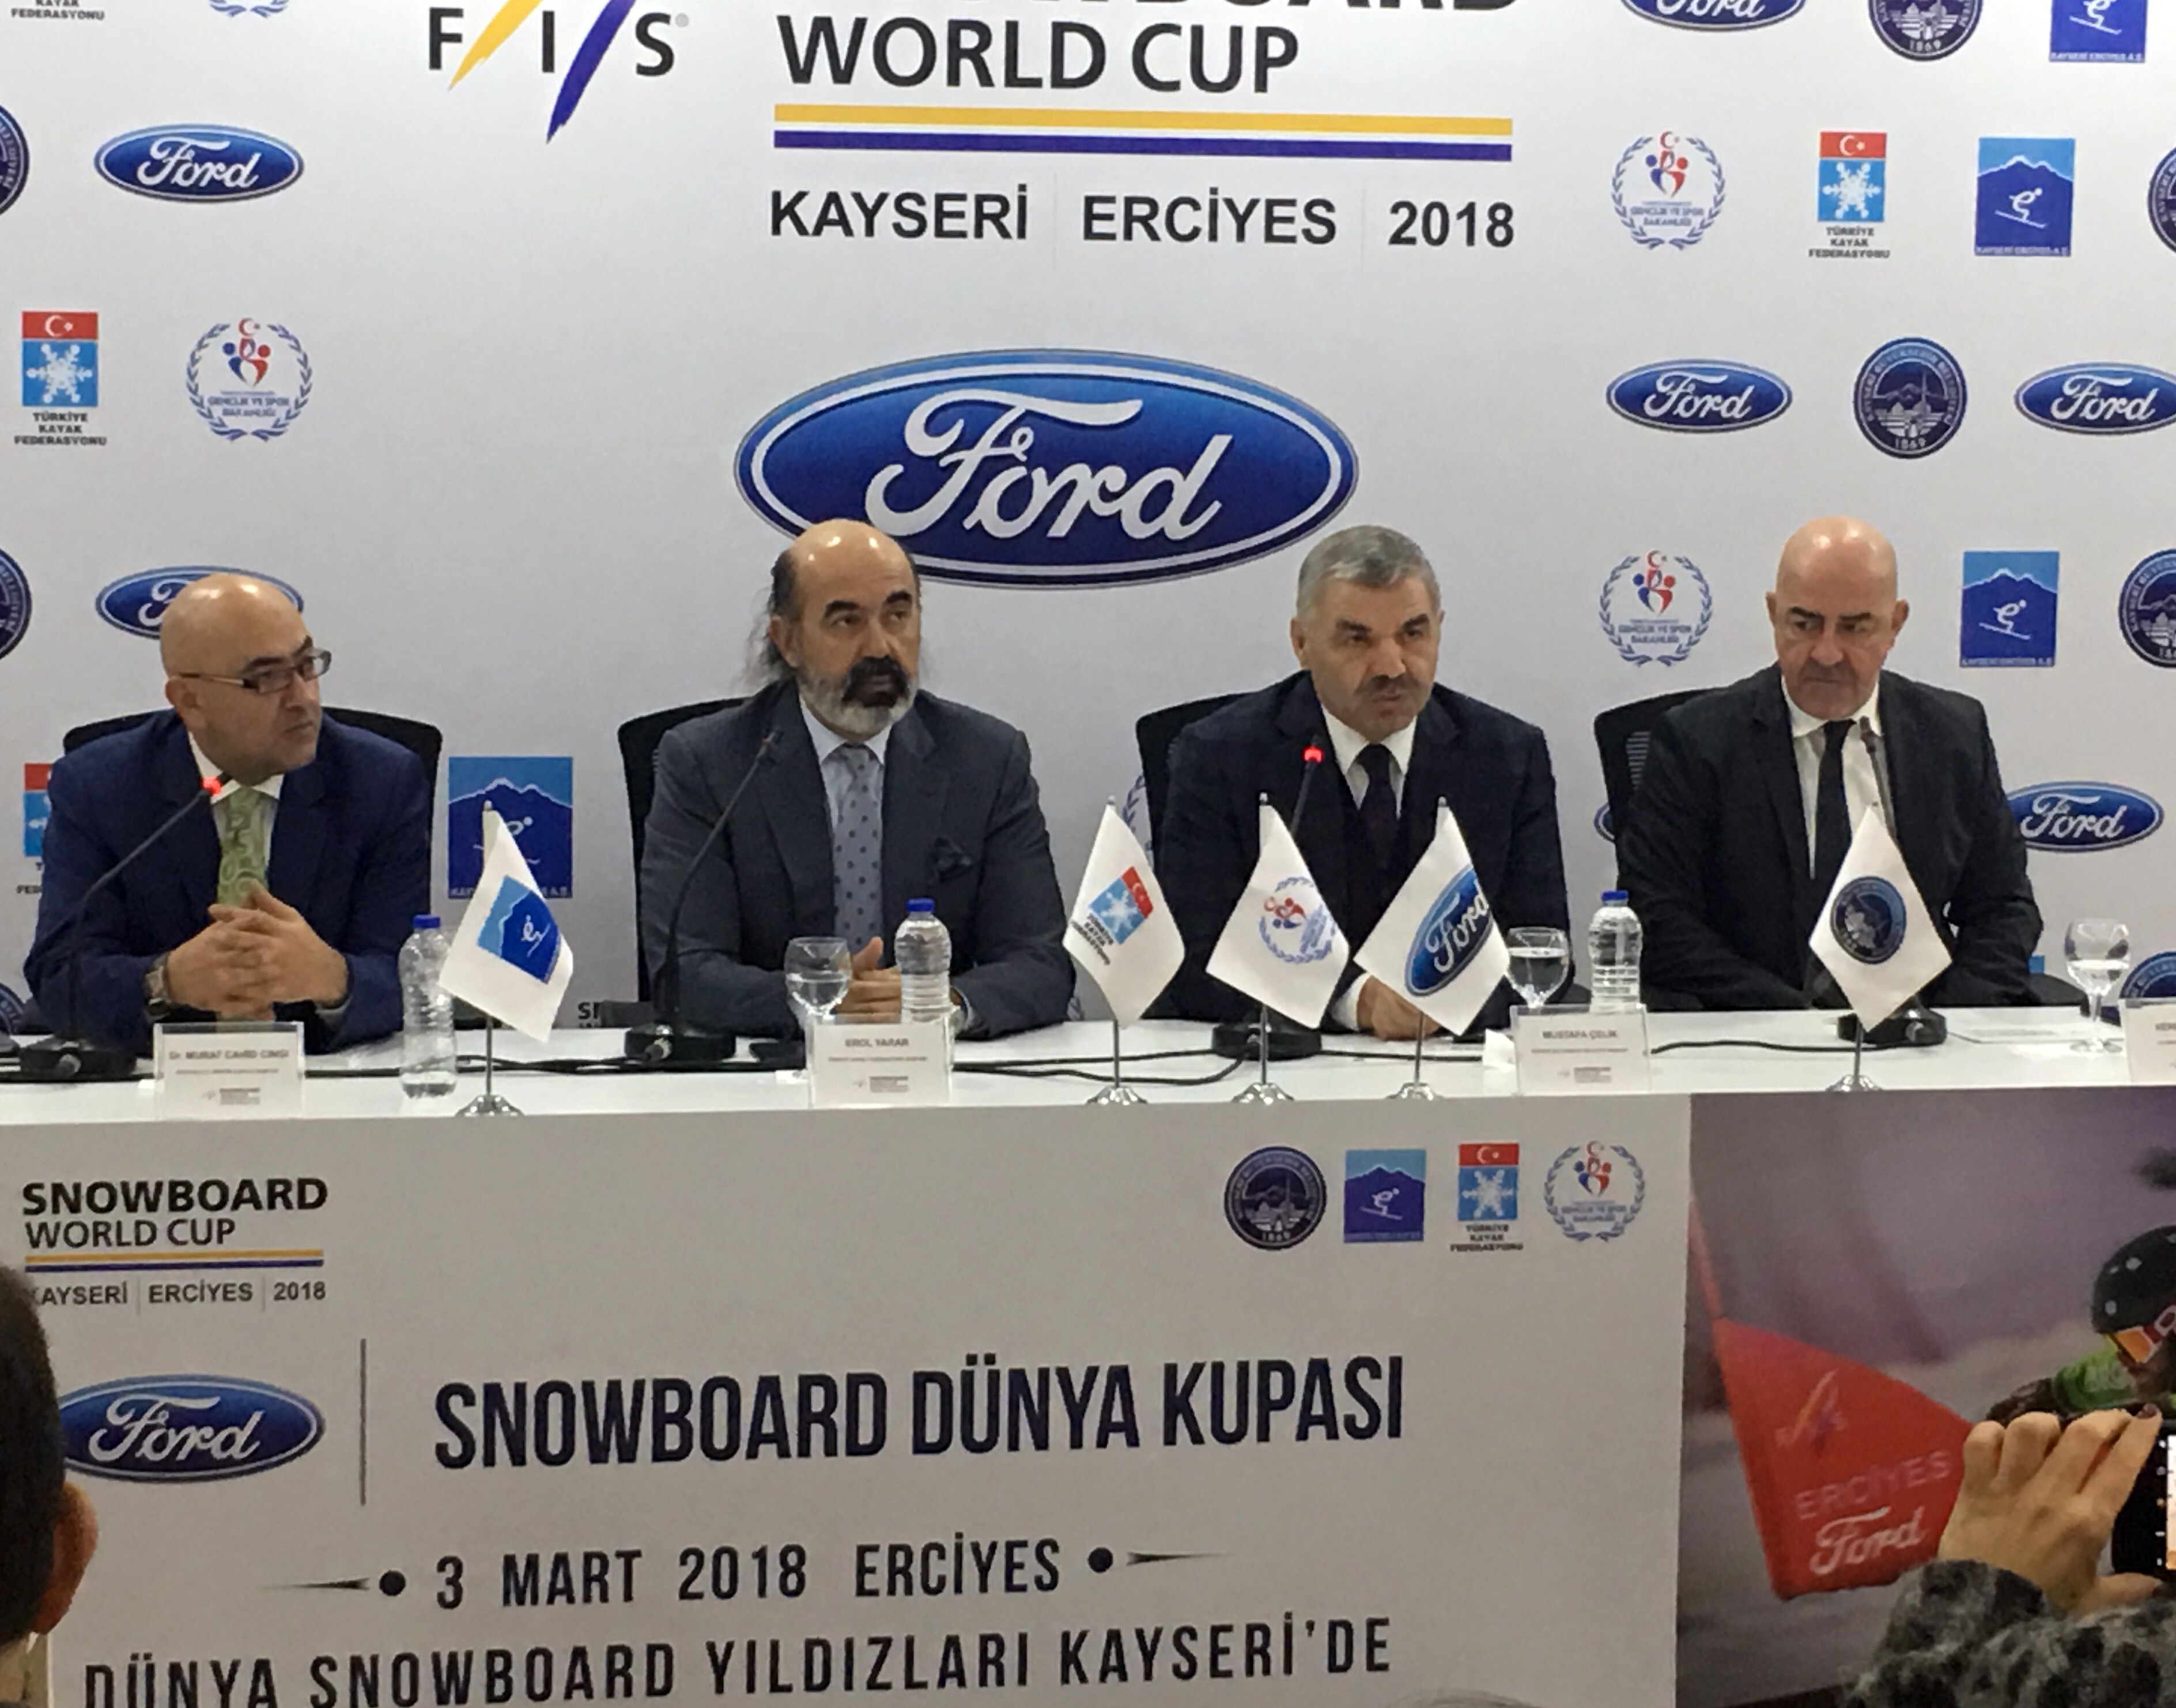 FORD Snowboard Dünya Kupası, 3 Mart’ta Erciyes’te